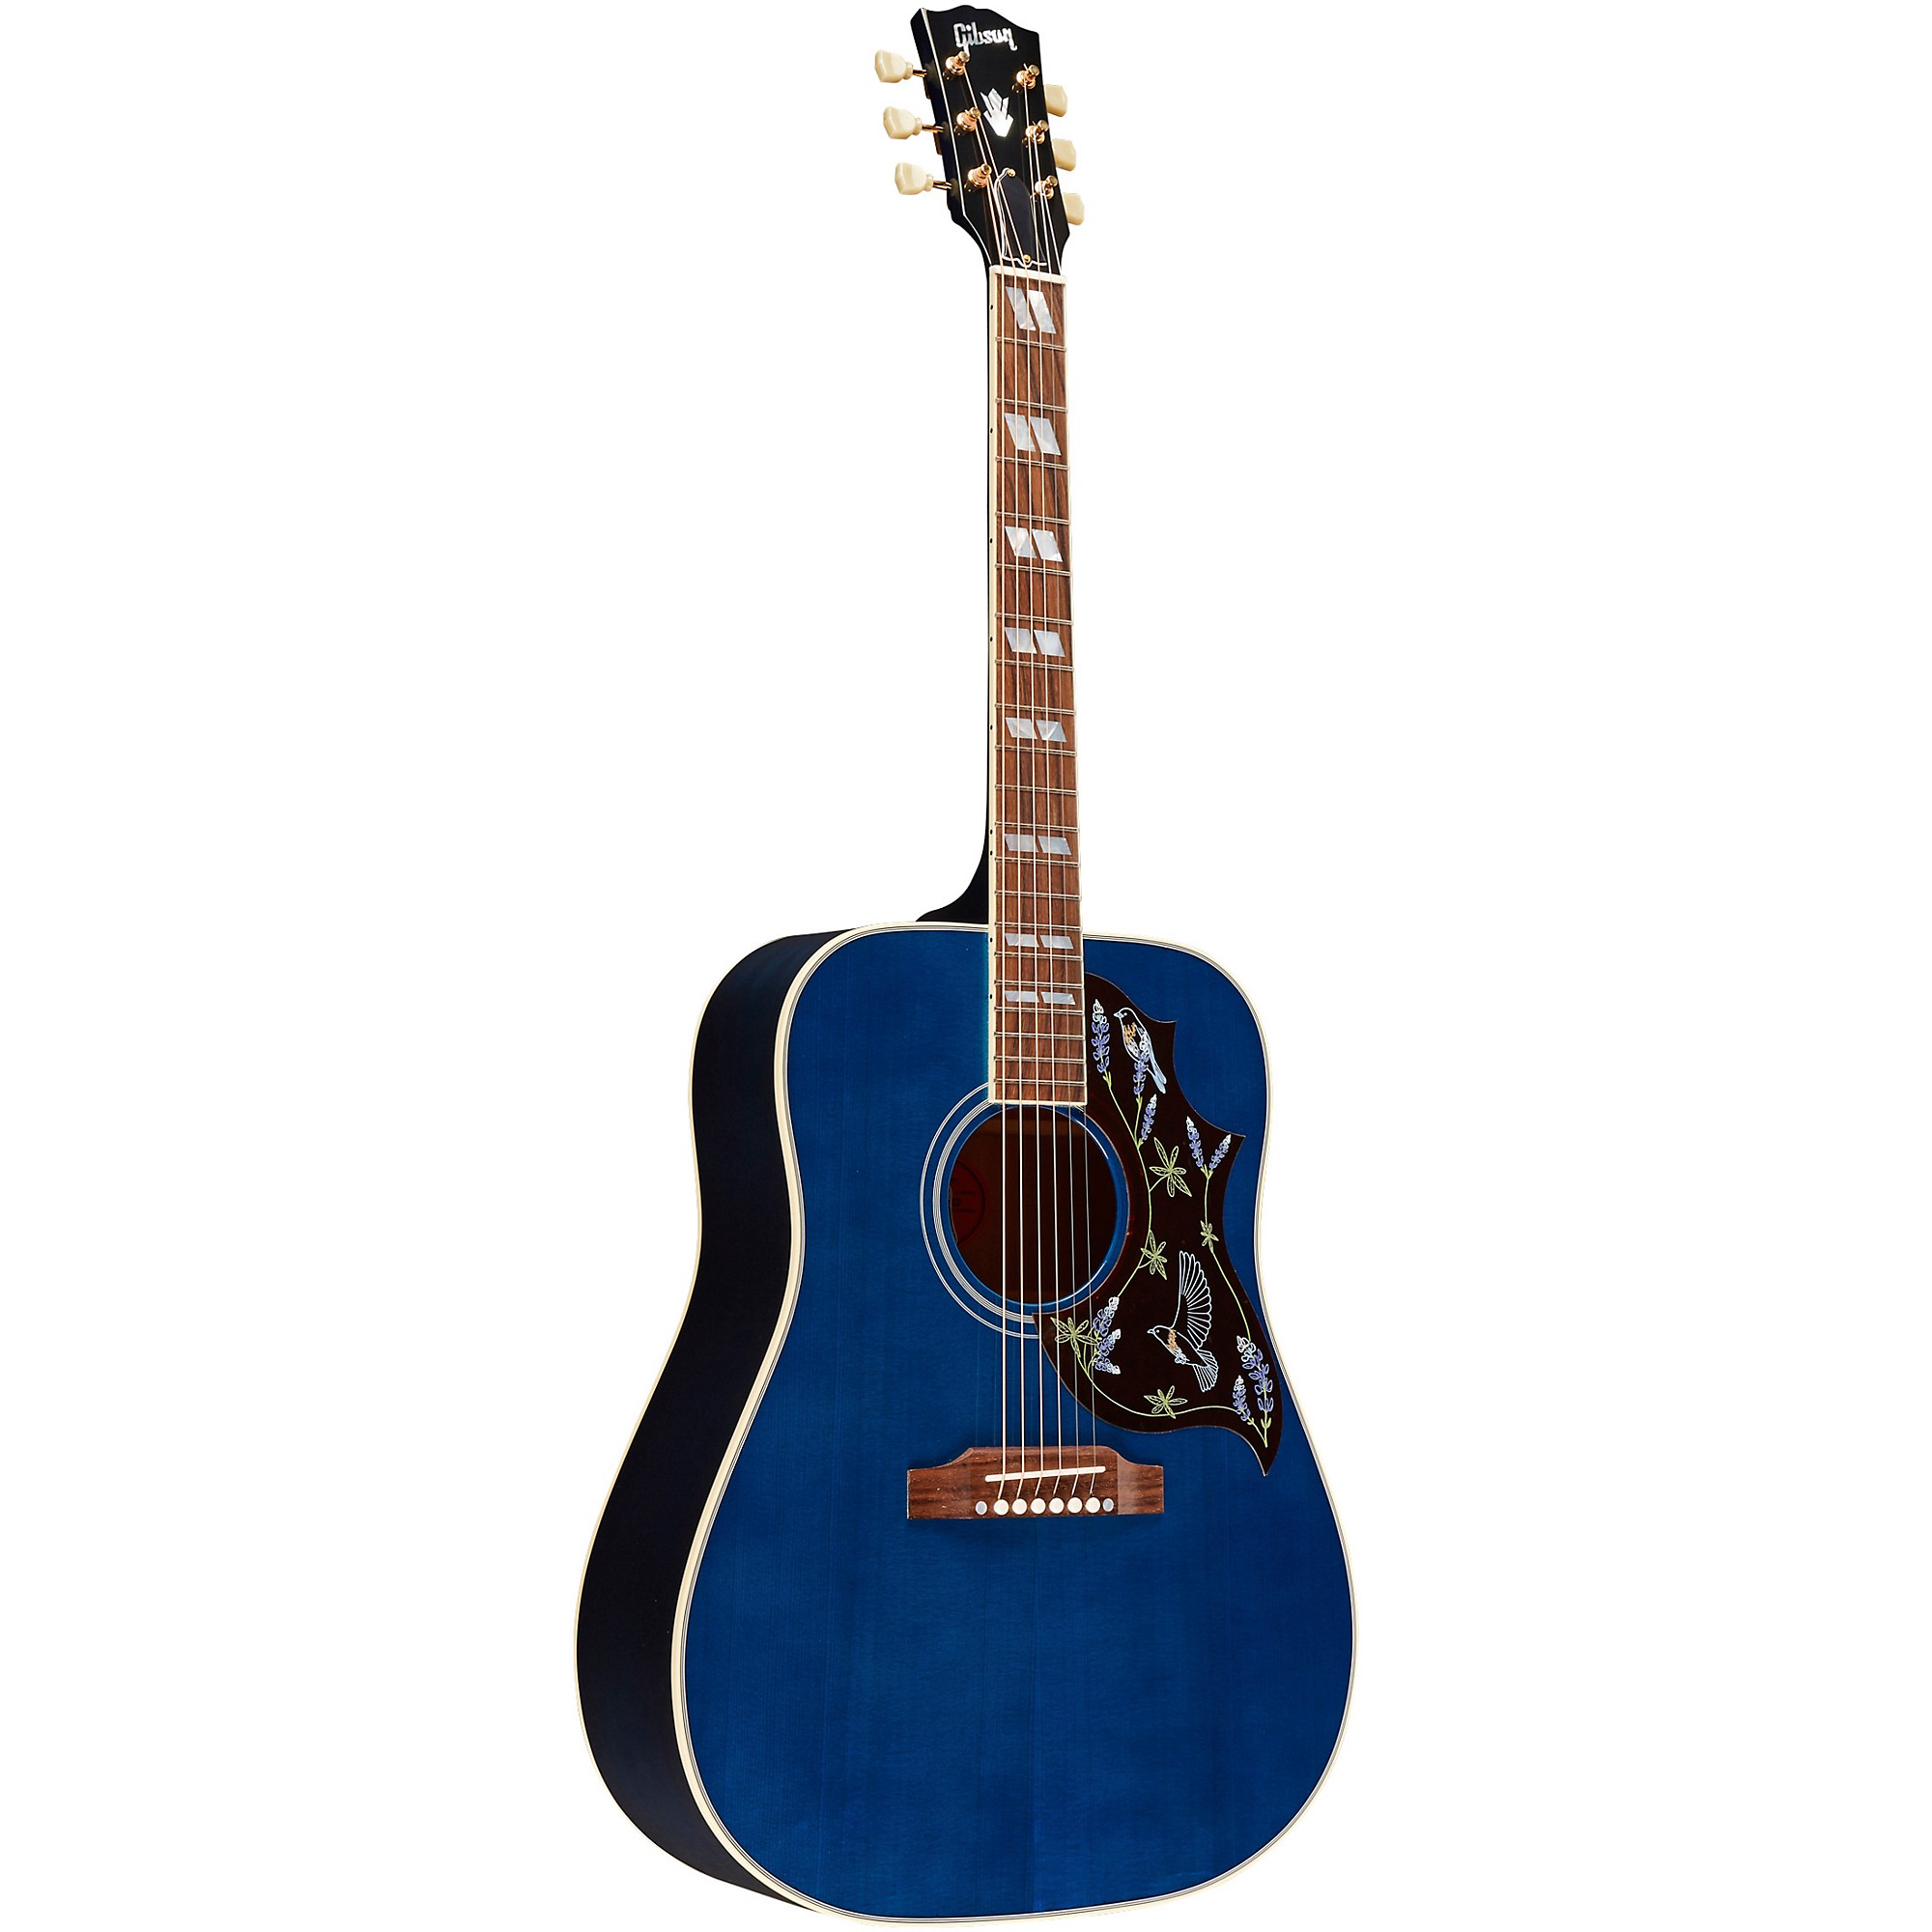 Акустически-электрическая гитара Gibson Miranda Lambert Bluebird Signature Bluebonnet